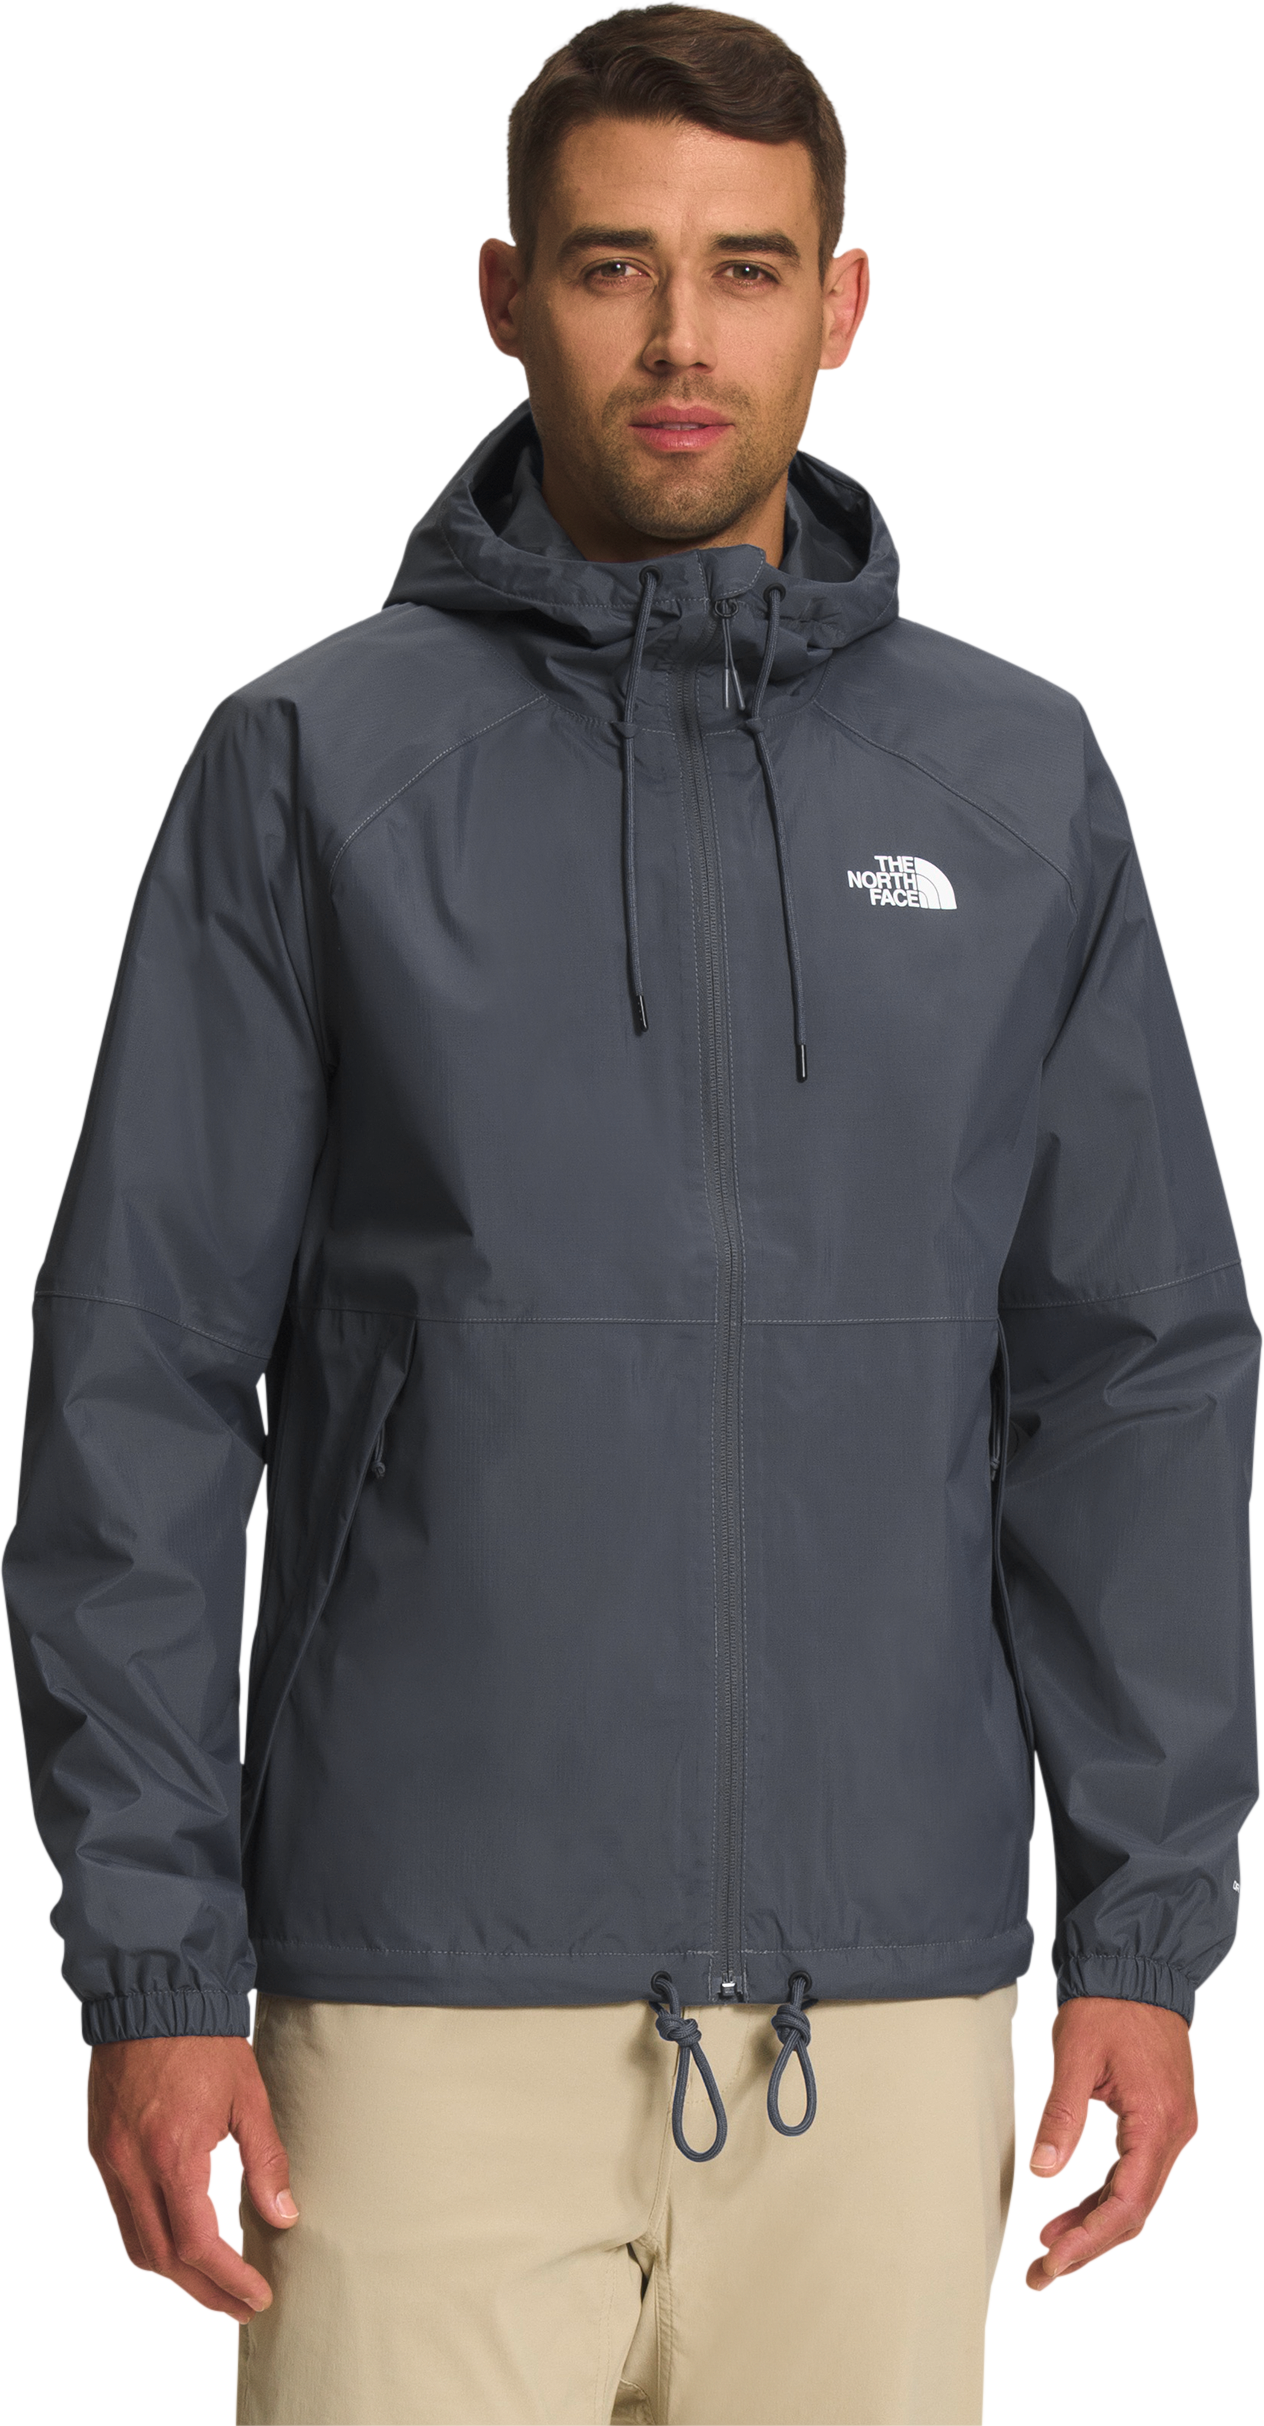 The North Face Antora Rain Full-Zip Long-Sleeve Hoodie for Men - Vandis Grey - 2XL